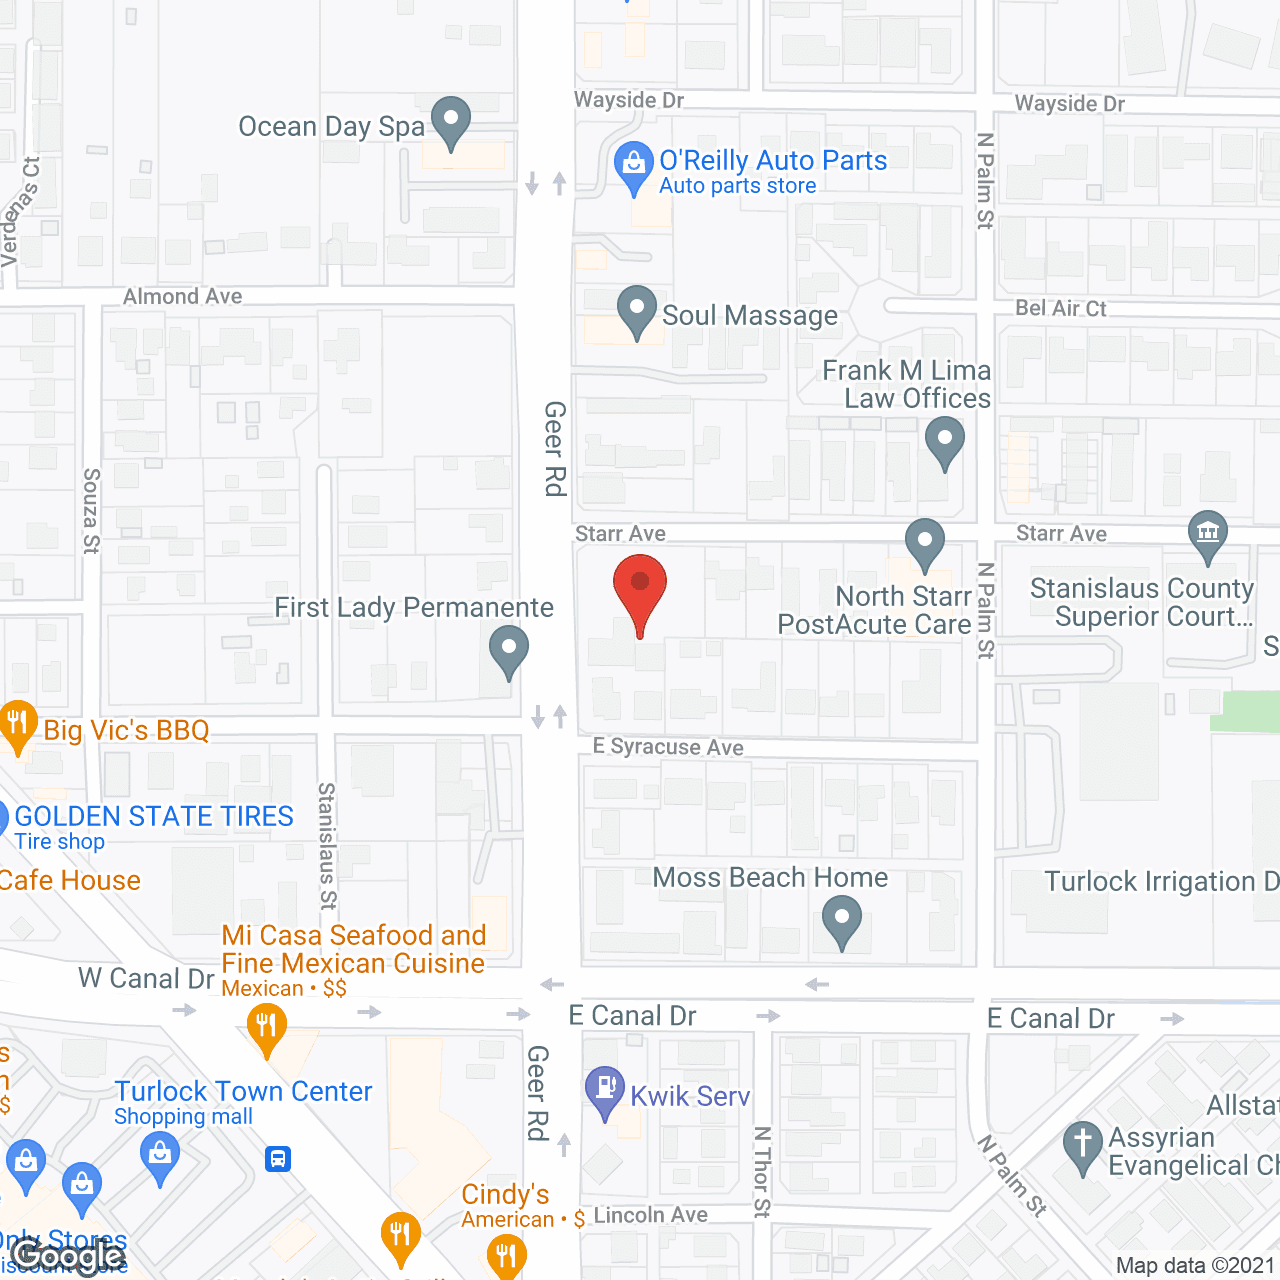 Lifespring Senior Campus in google map